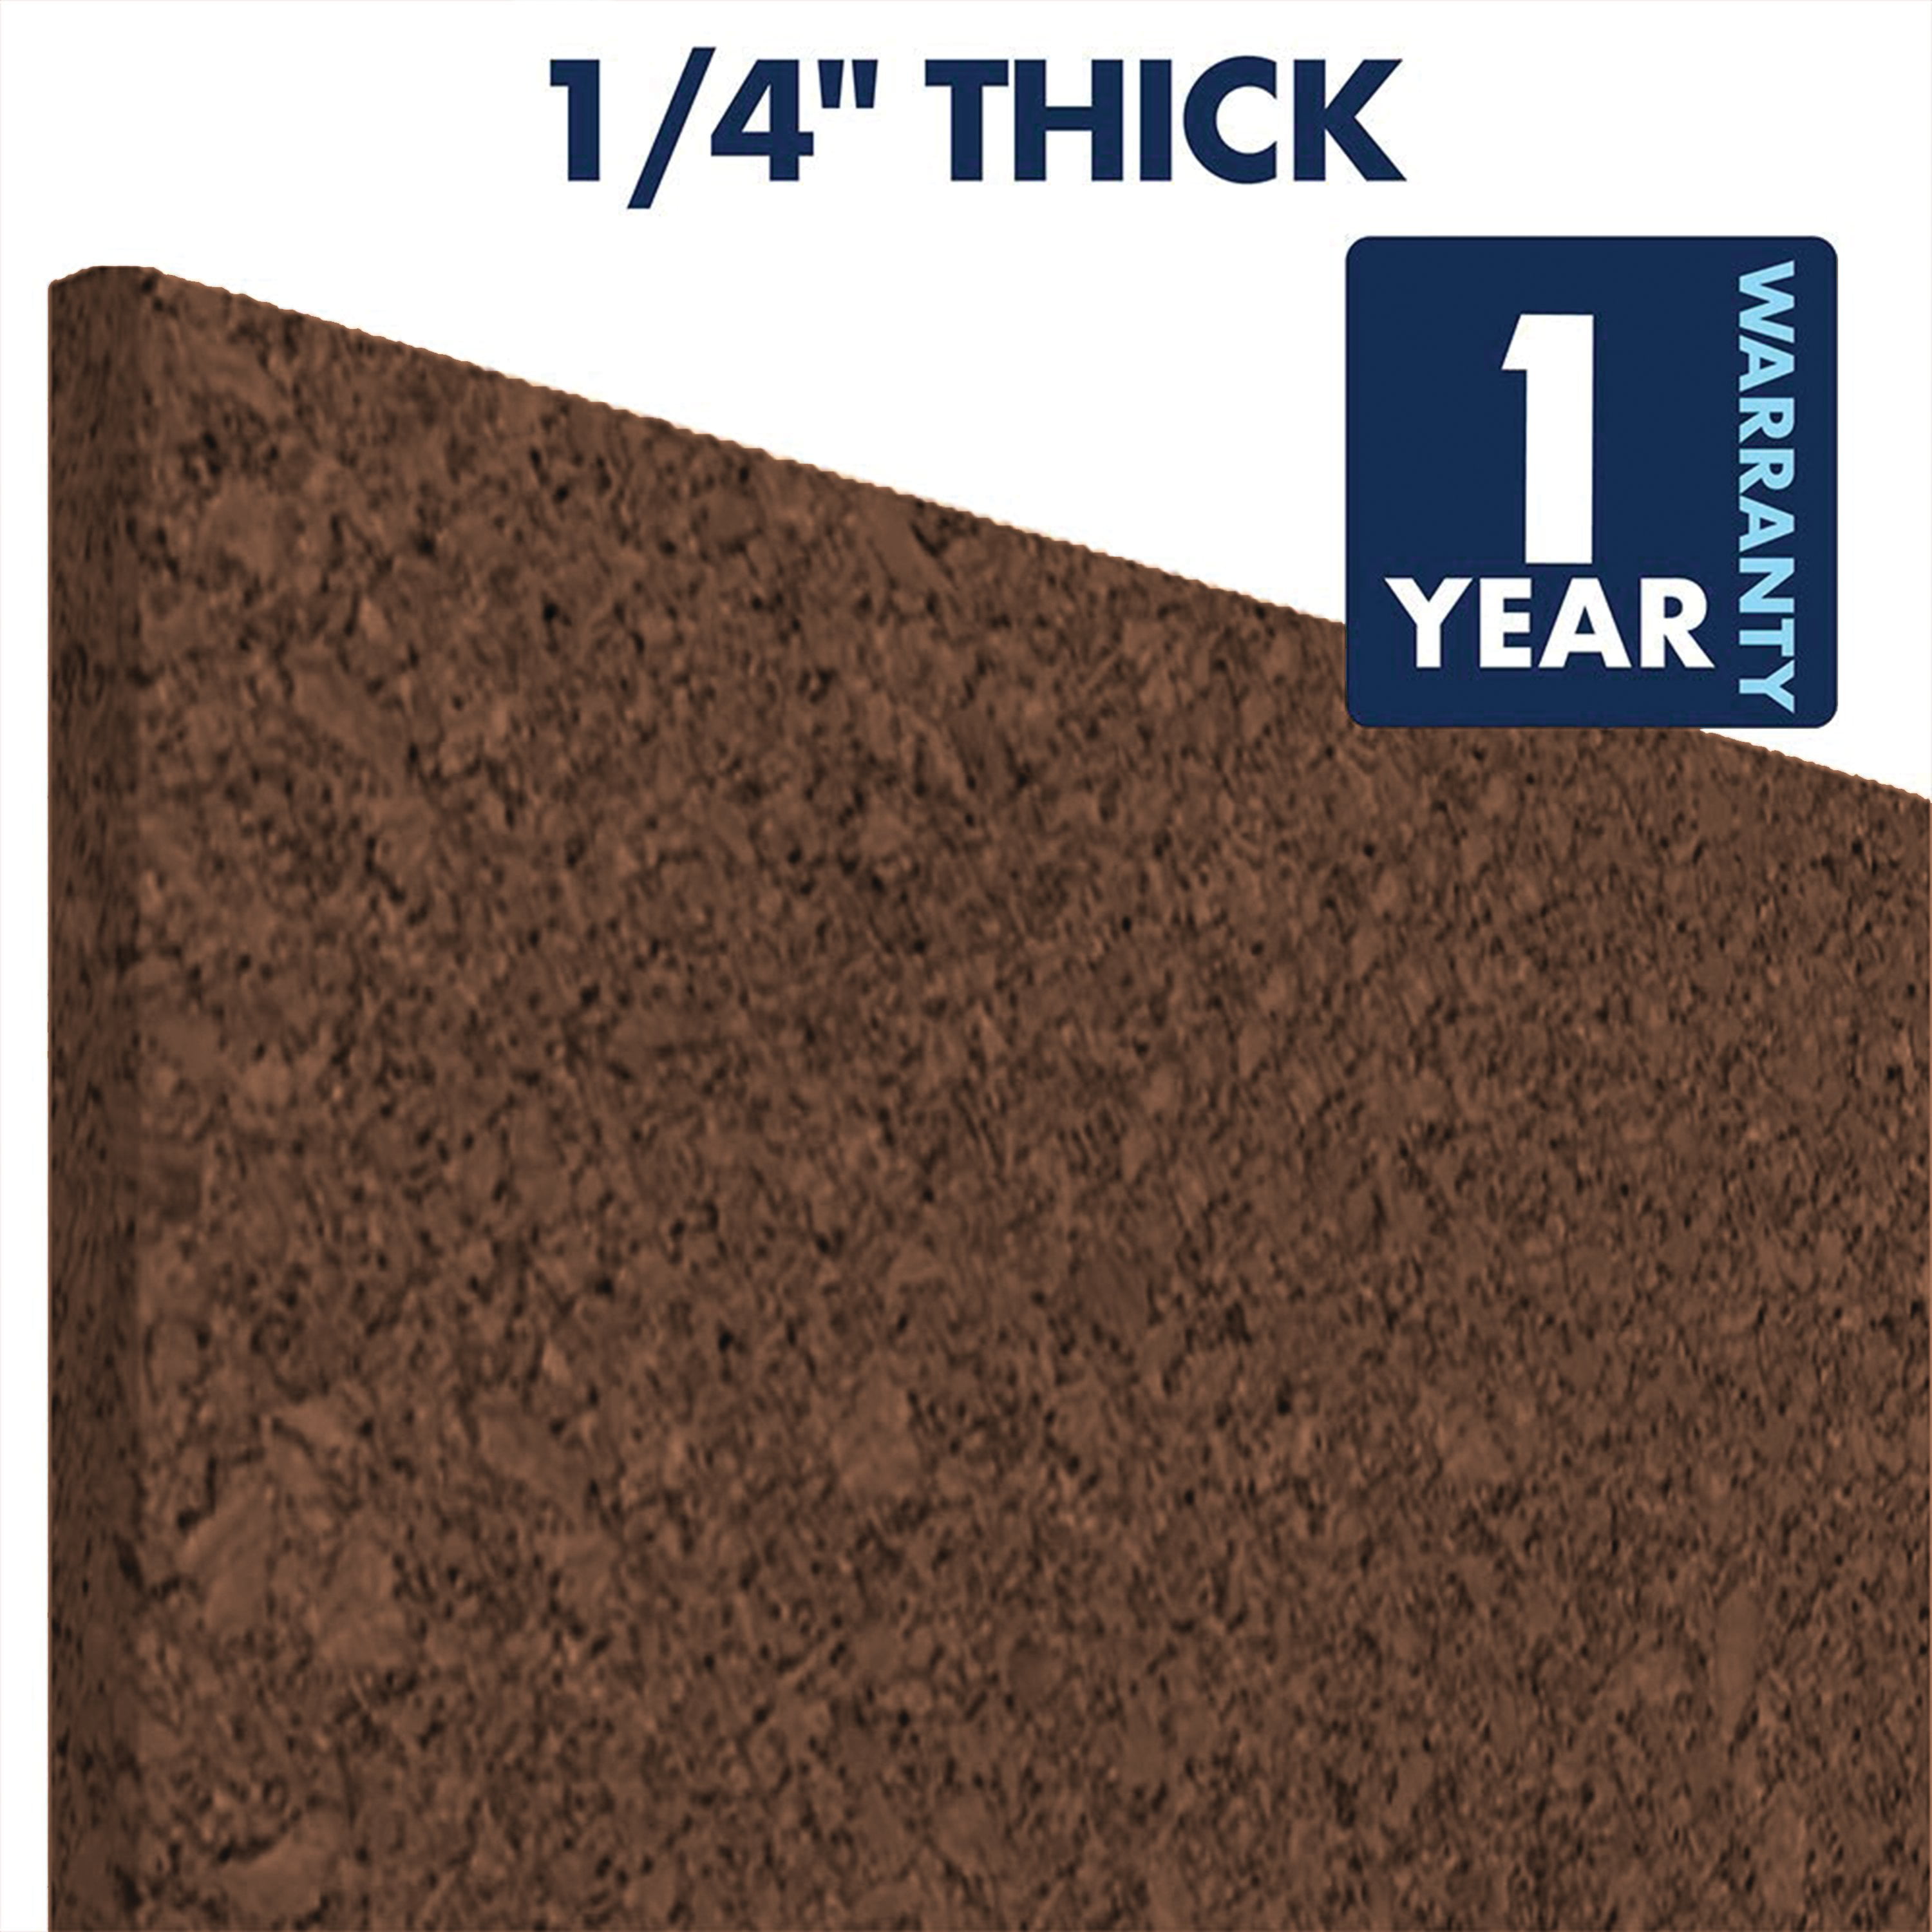 New Cork Tiles Dark 4 Pack Corkboard Wall Bulletin Boards Cork Board 12 x 12